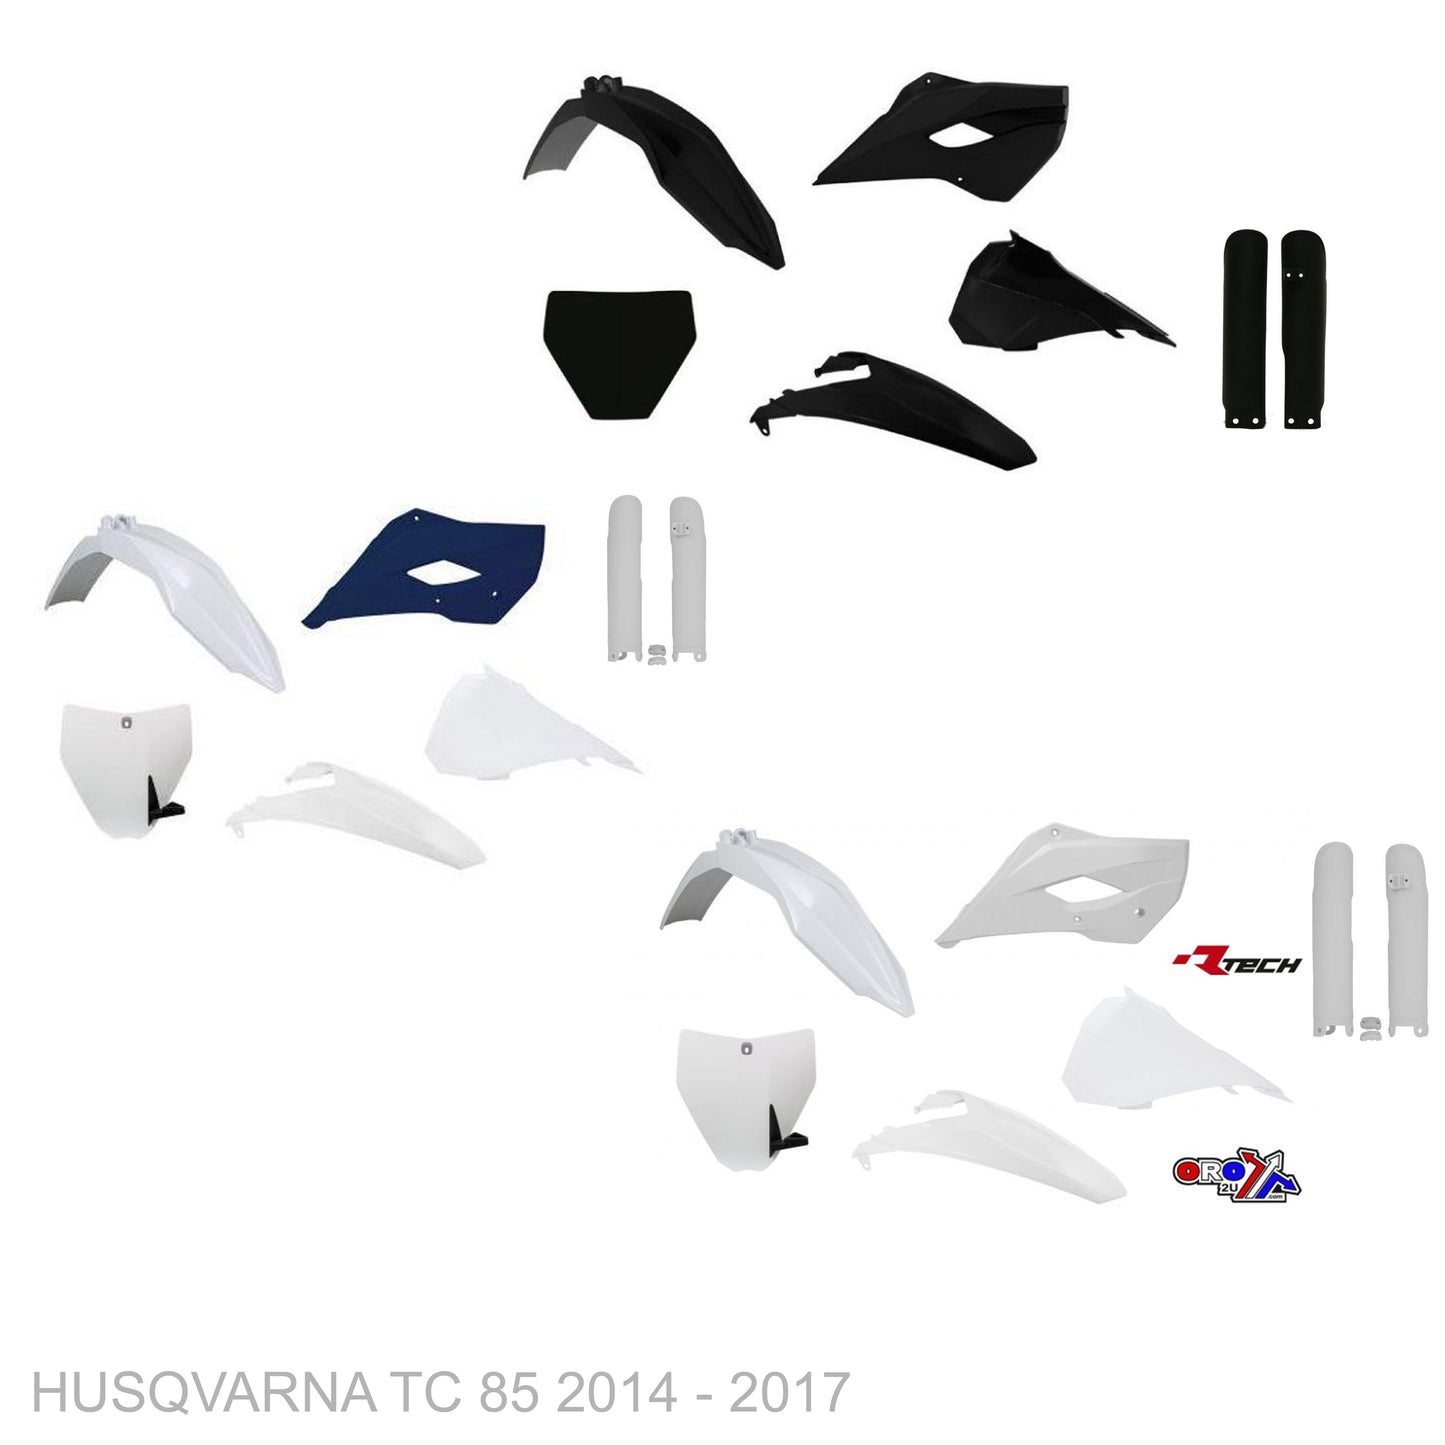 HUSQVARNA TC 85 2014 - 2017 Start From Scratch Graphics Kit